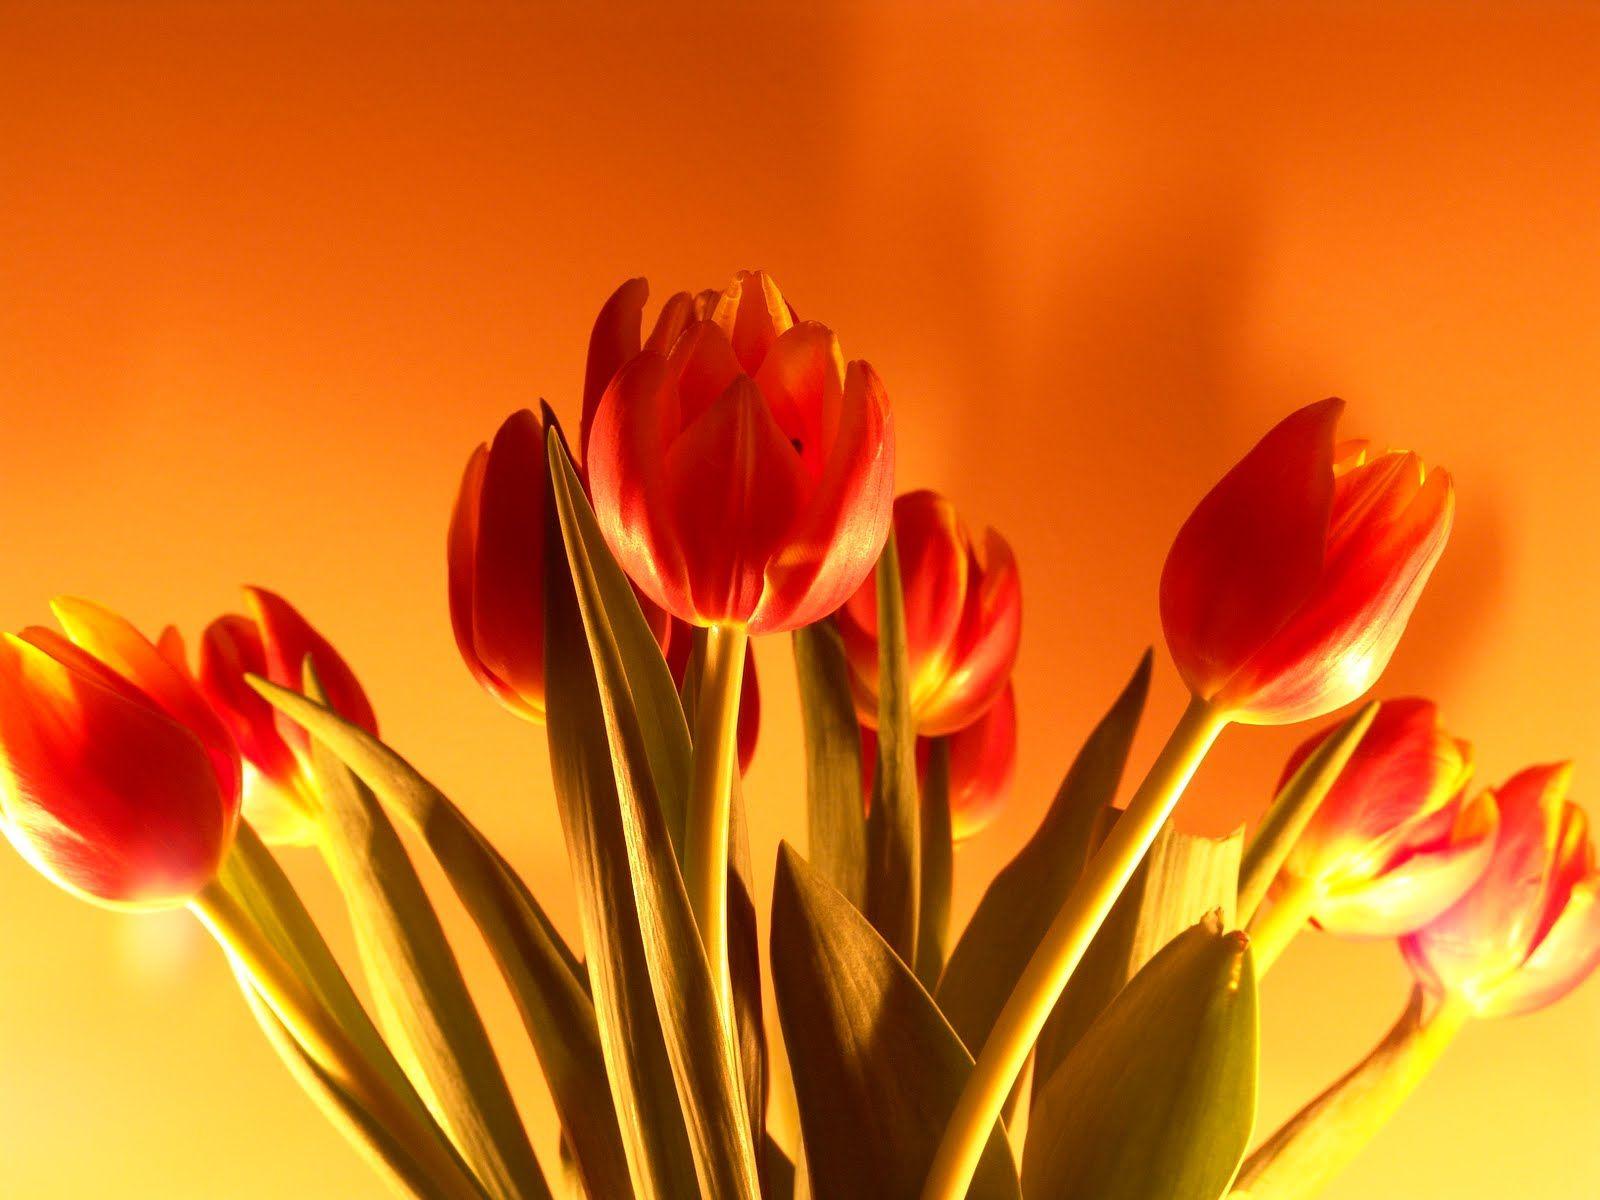 Red tulips flower wallpaper red tulips flower desktop background